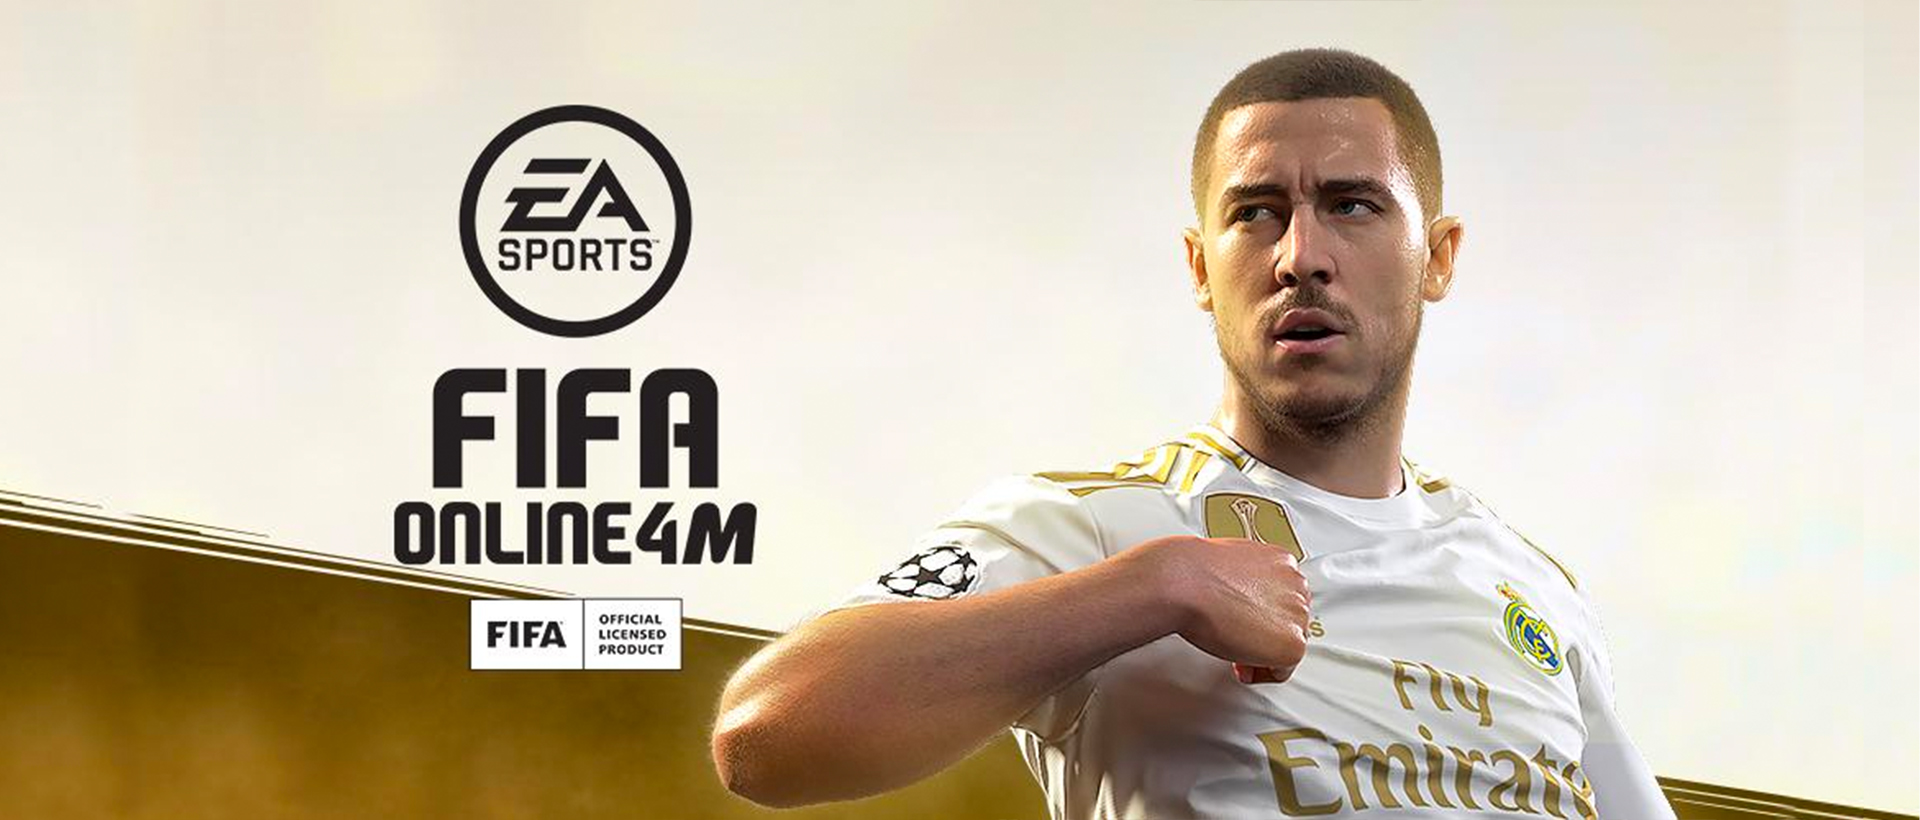 FIFA ONLINE 4 M by EA SPORTS™ PC 버전, 컴퓨터에서 설치하고 안전하게 즐기자 - 녹스 앱플레이어